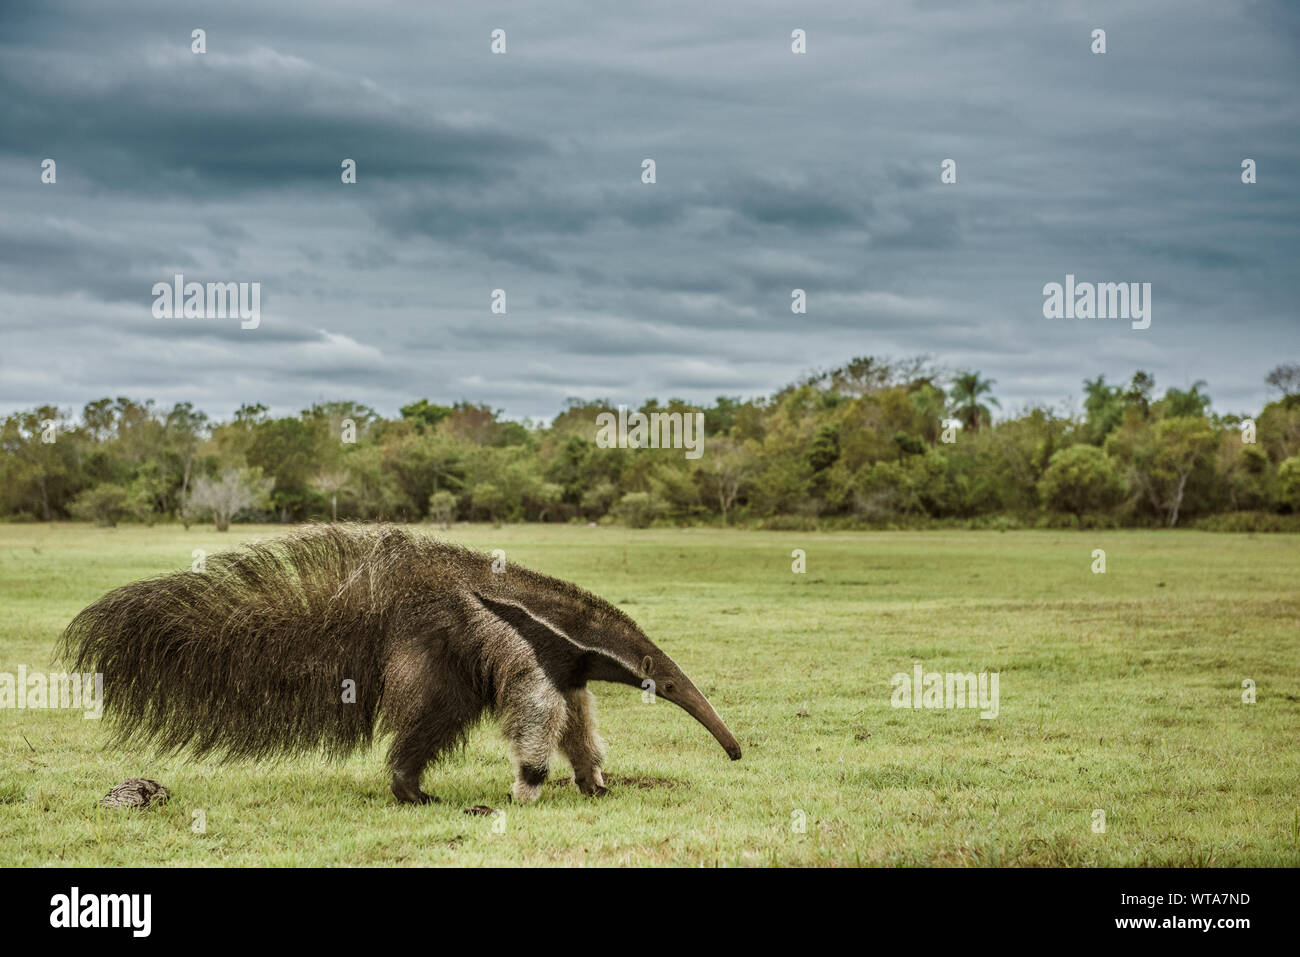 Giant anteater walking in Brazilian Pantanal wetland Stock Photo